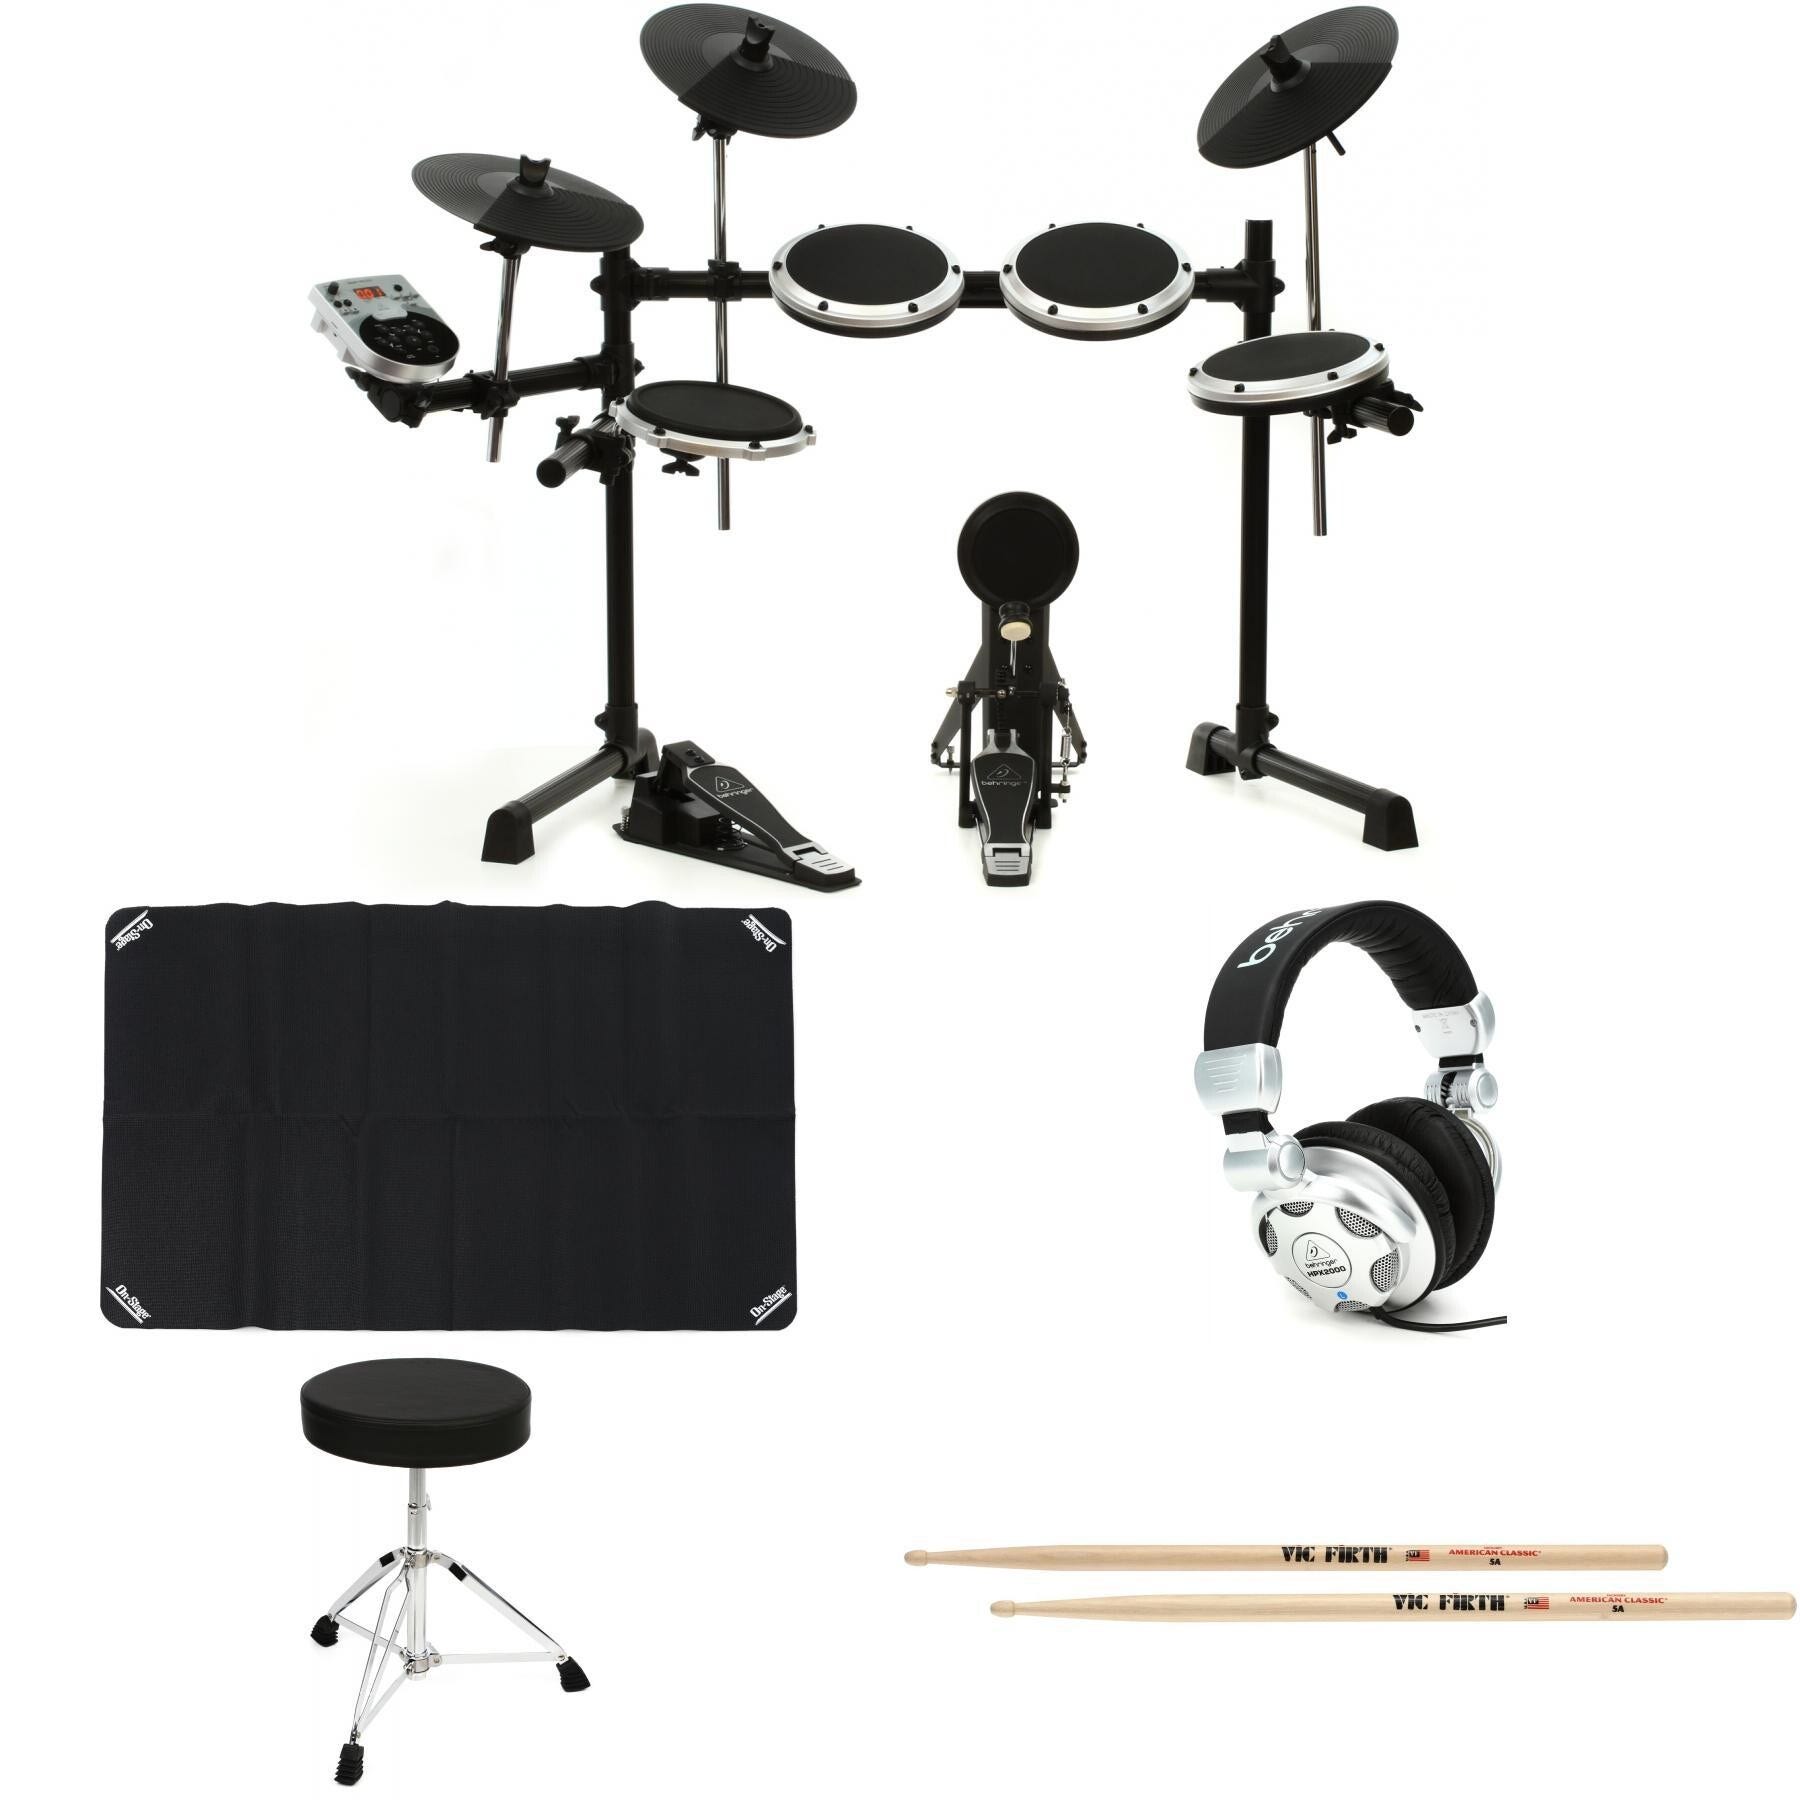 Best Buy: DrumFire 6' x 4' Nonslip Drum Mat Black DMA6450